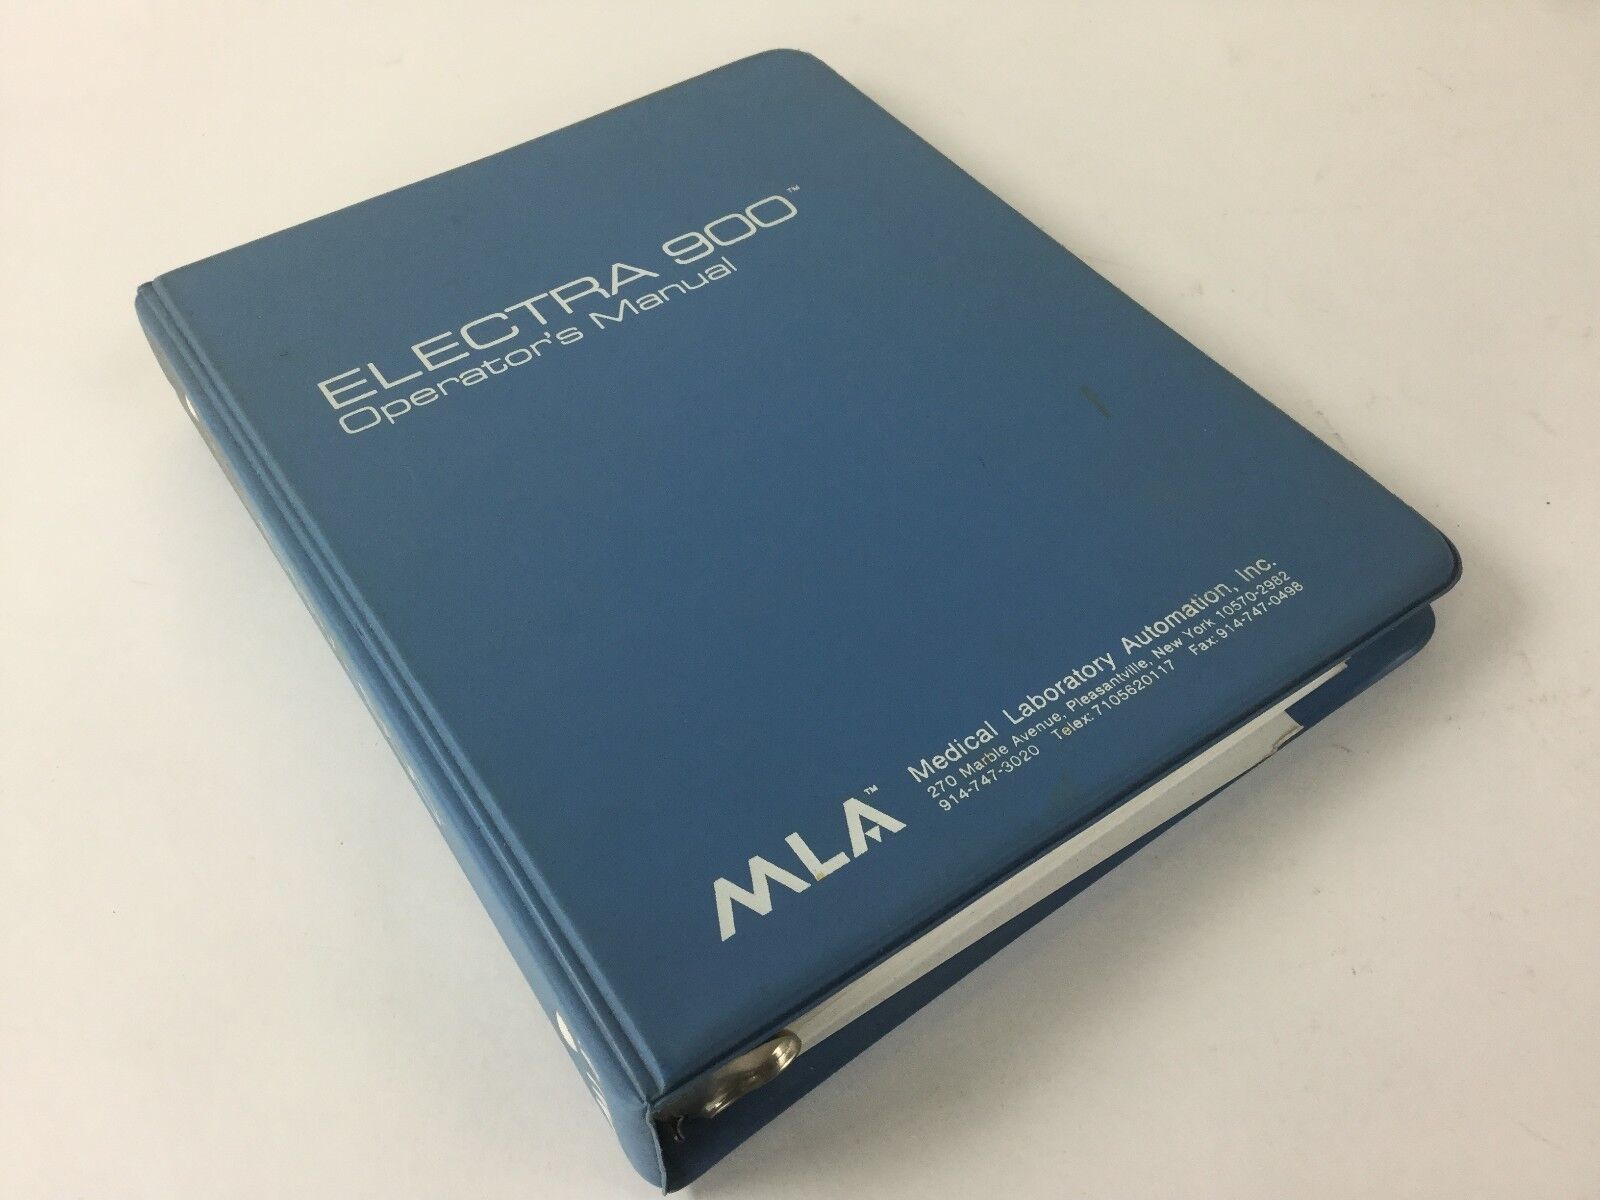 Medical Laboratory Operators Manual for Electra 900